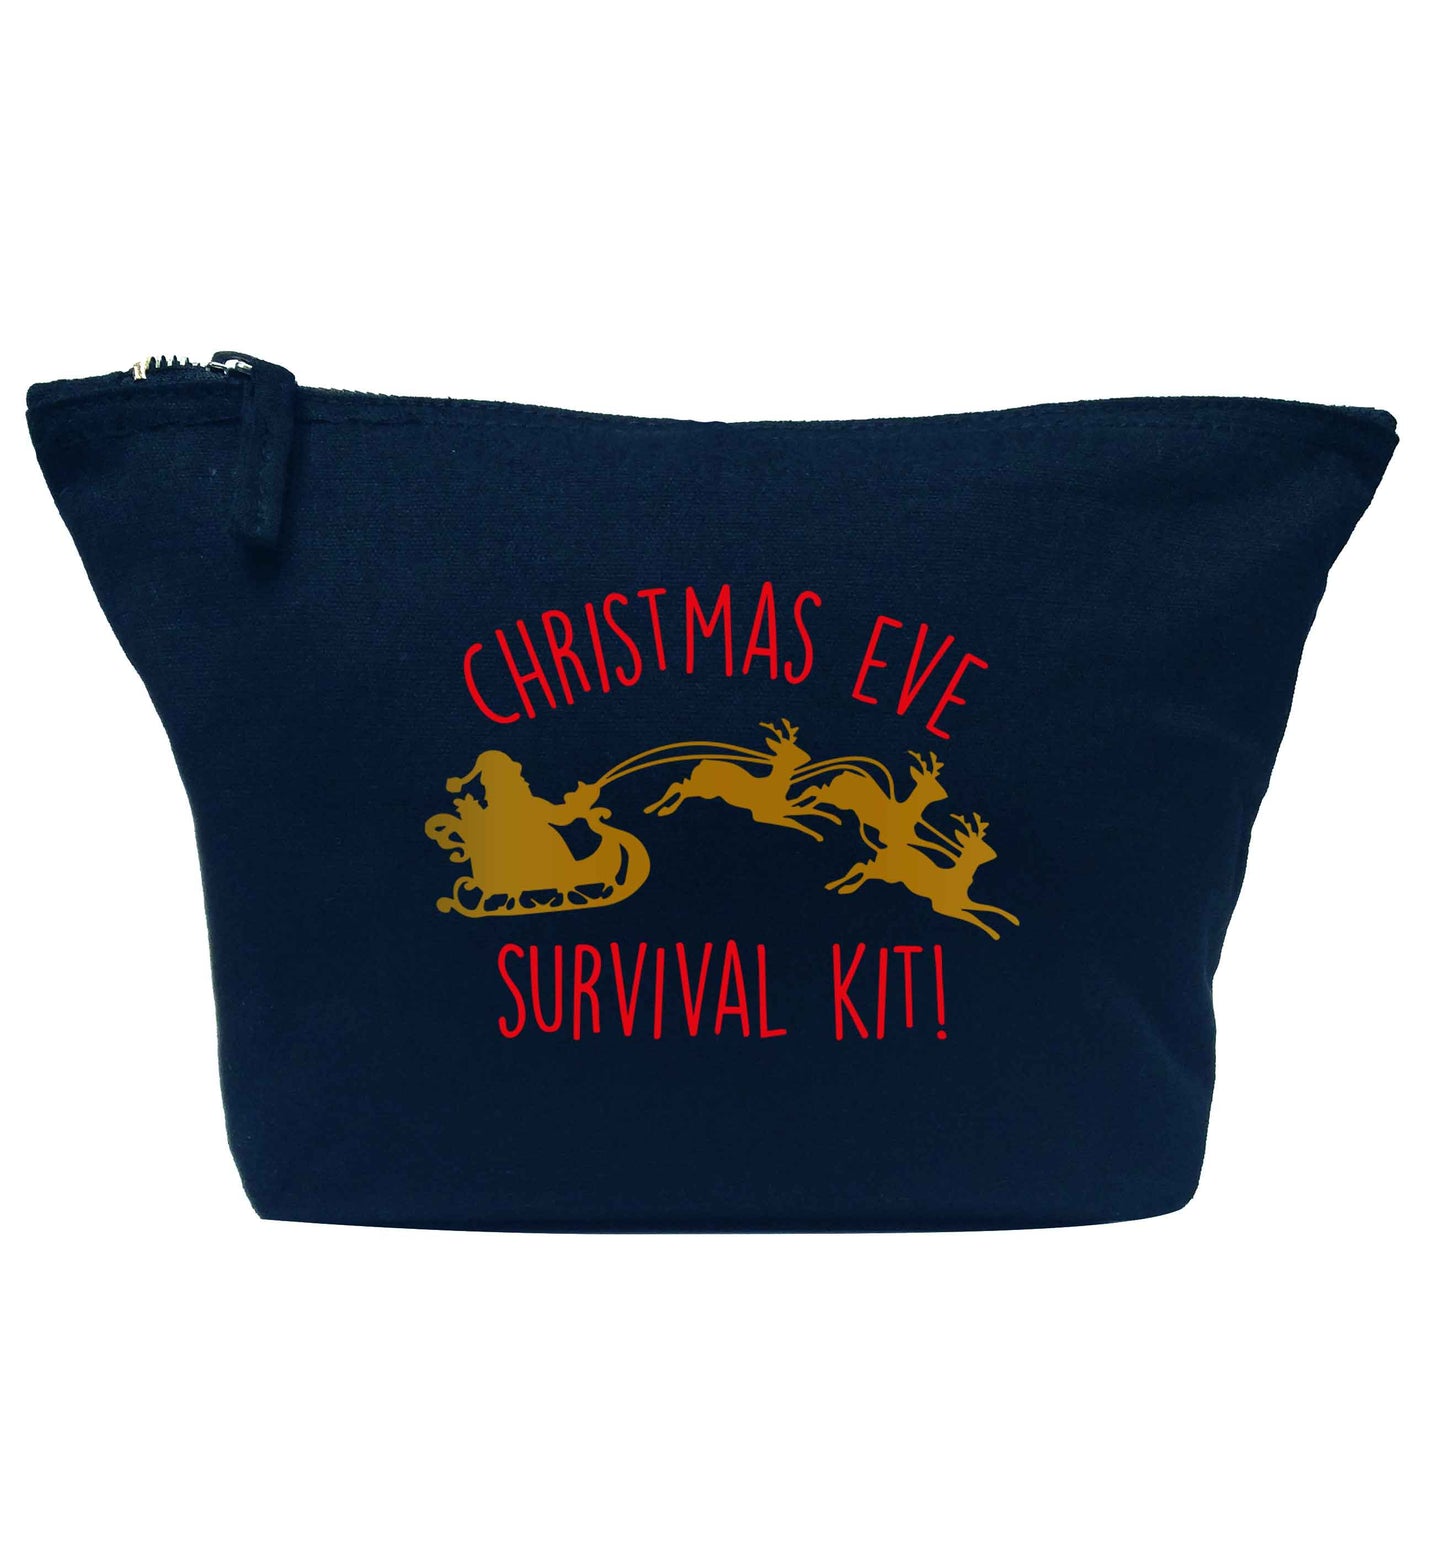 Christmas Day Survival Kitnavy makeup bag